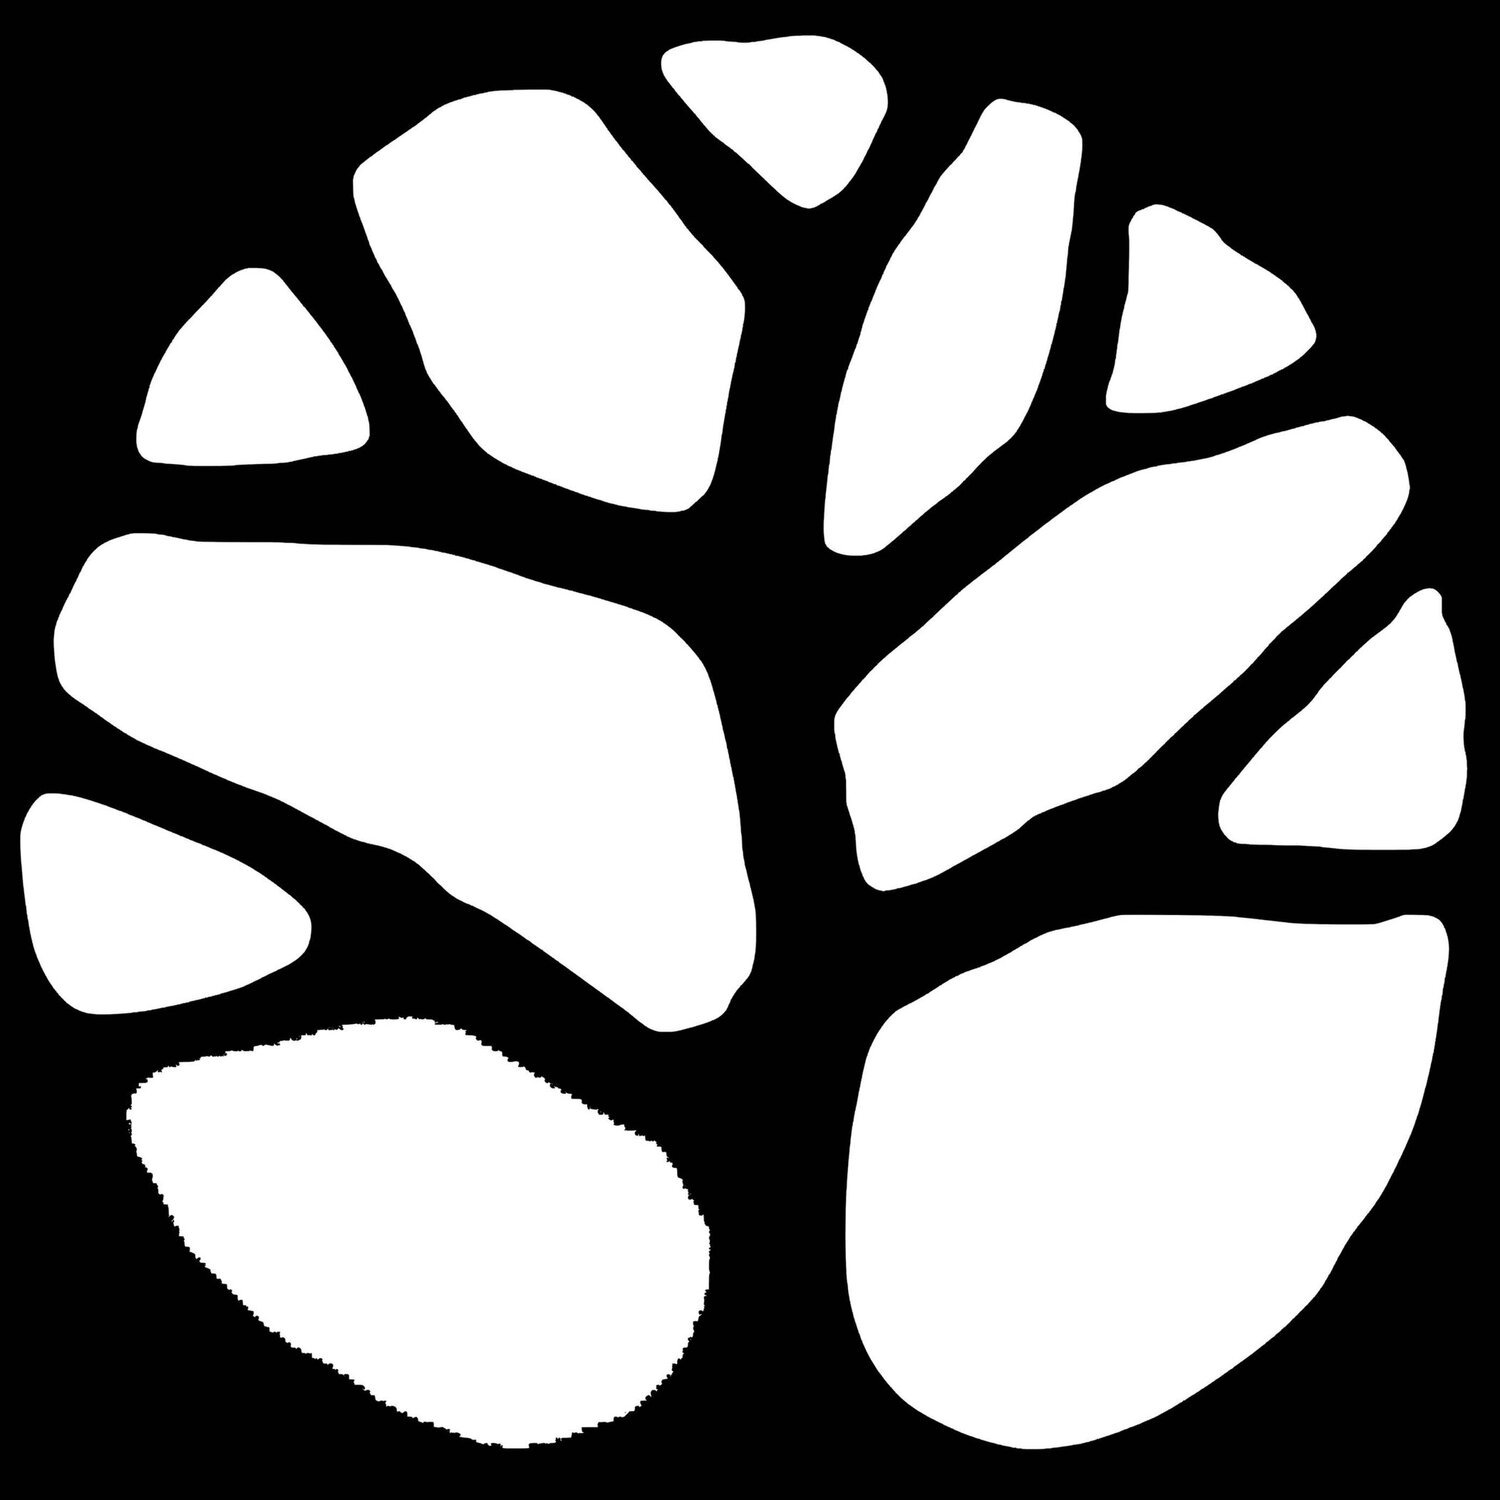 black+tree+logo.jpg